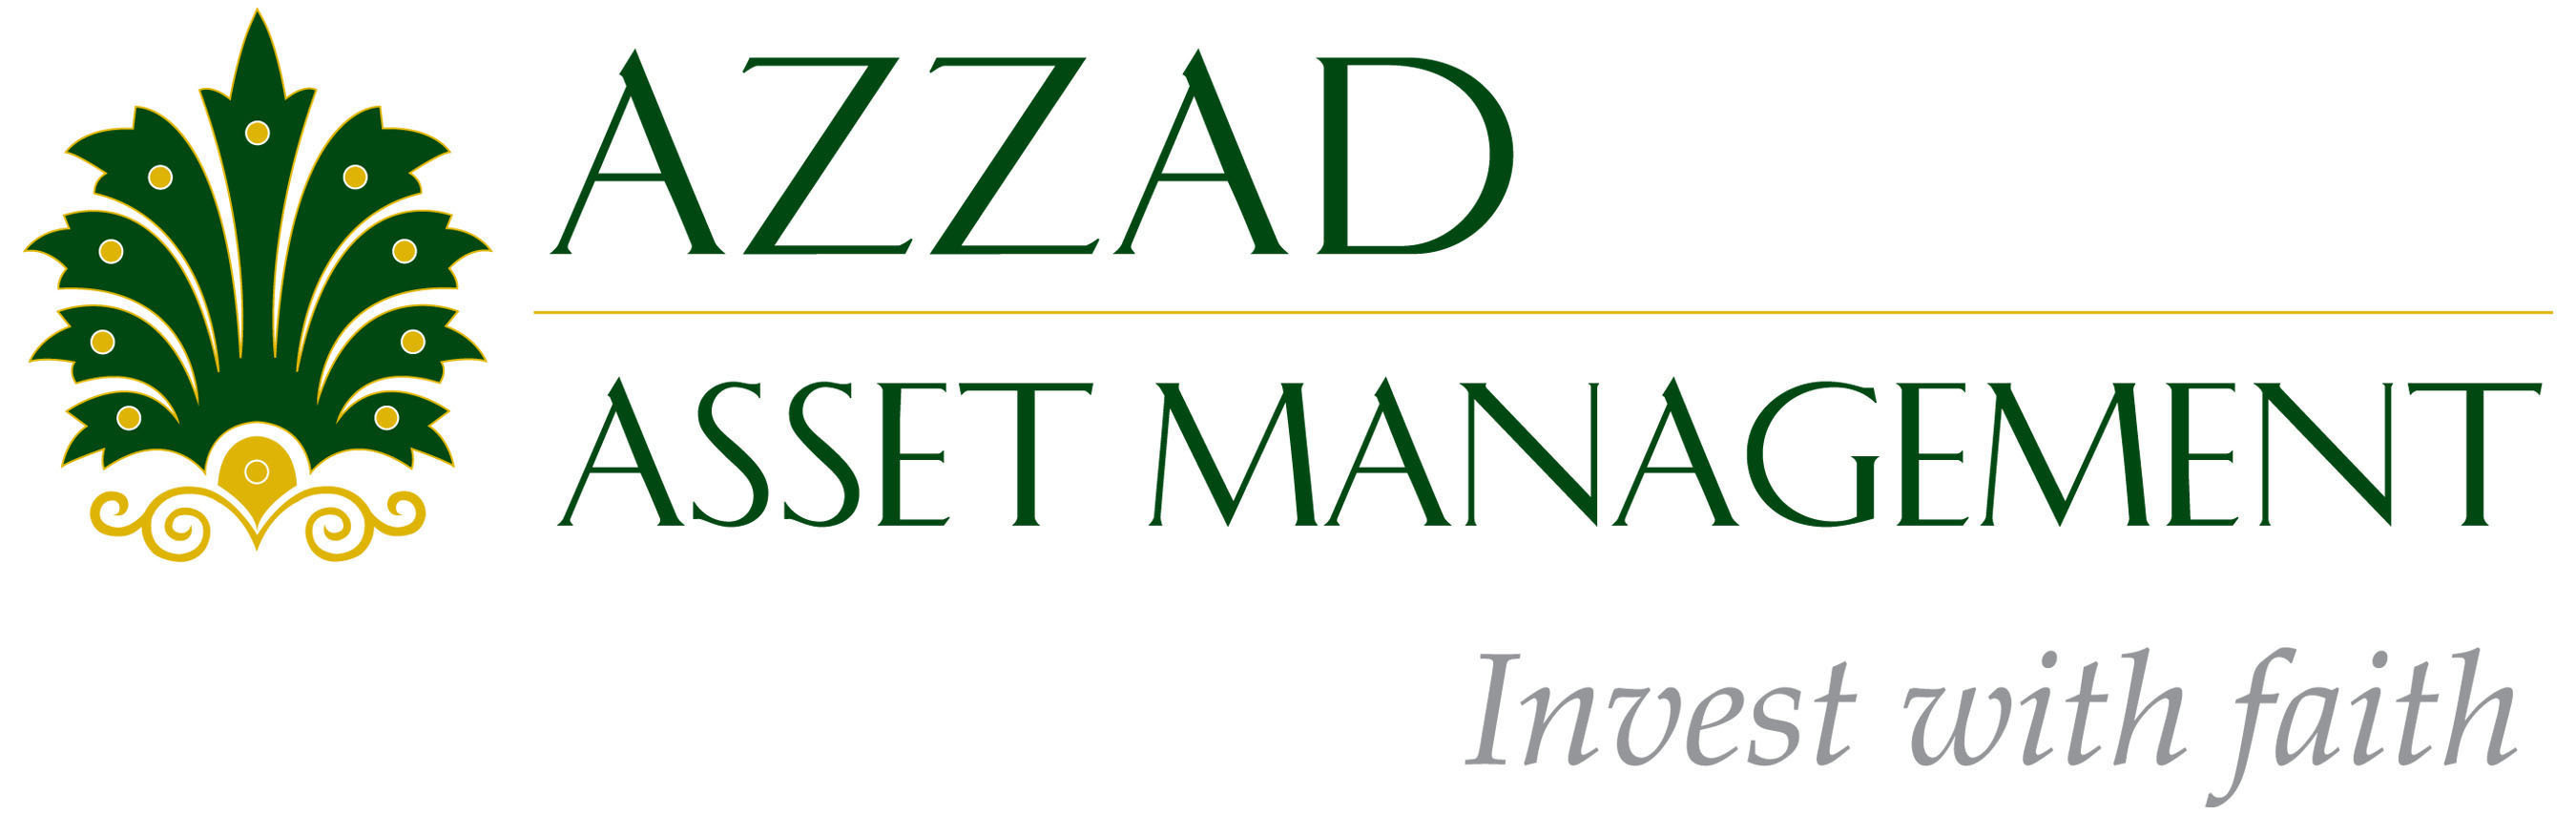 Azzad Asset Management Logo